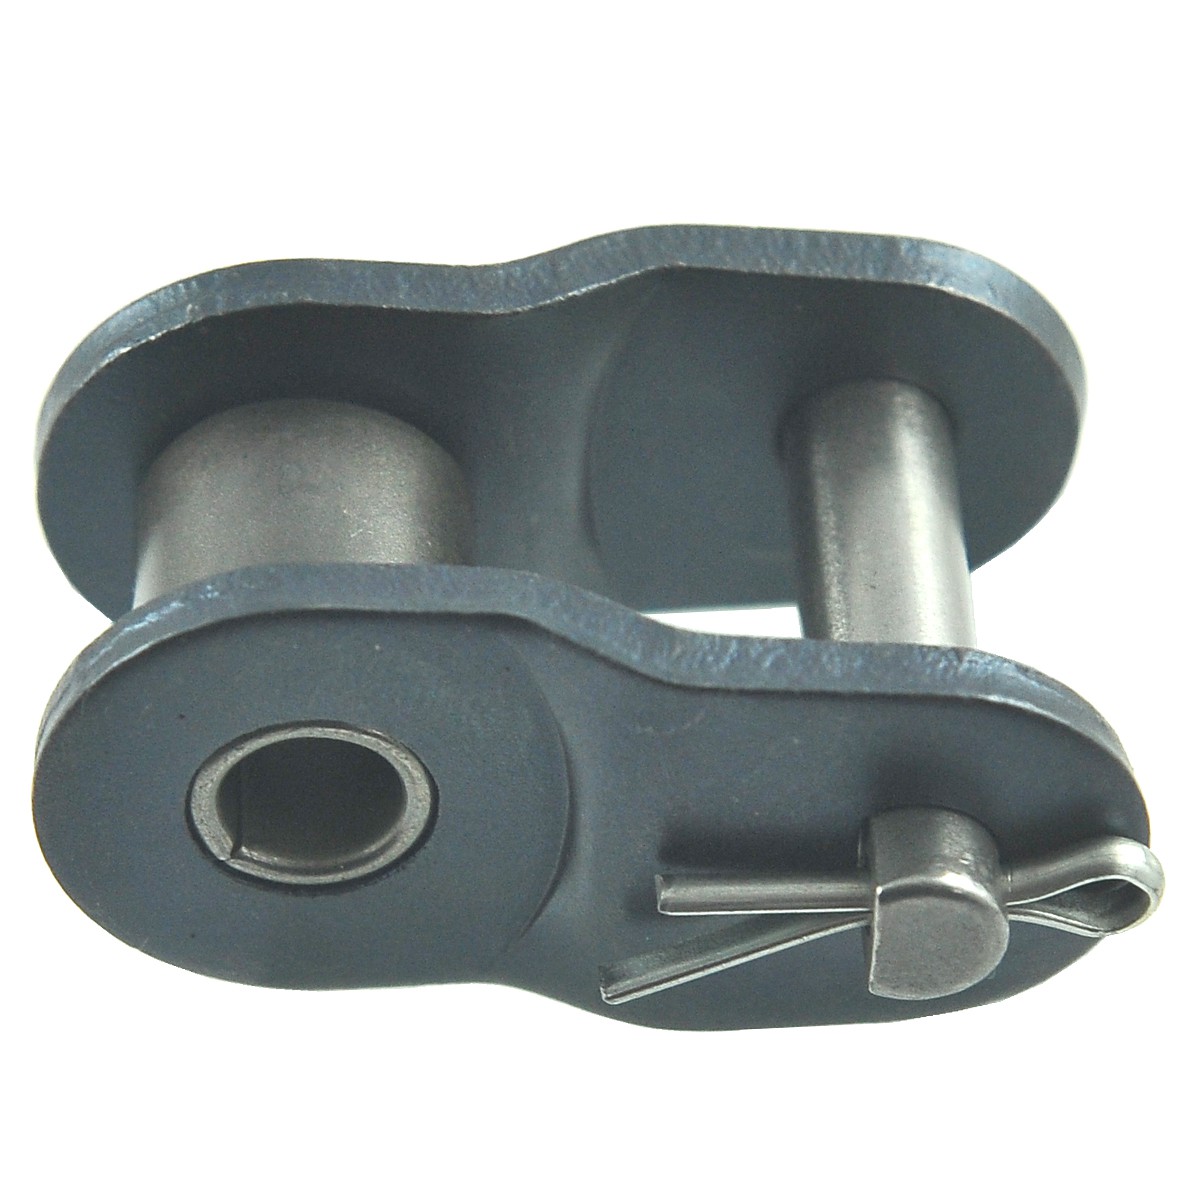 Rotary tiller chain clip / Kubota KRX164 / Kubota L3408/L3608 / W9516-52091 / 6-02-111-06